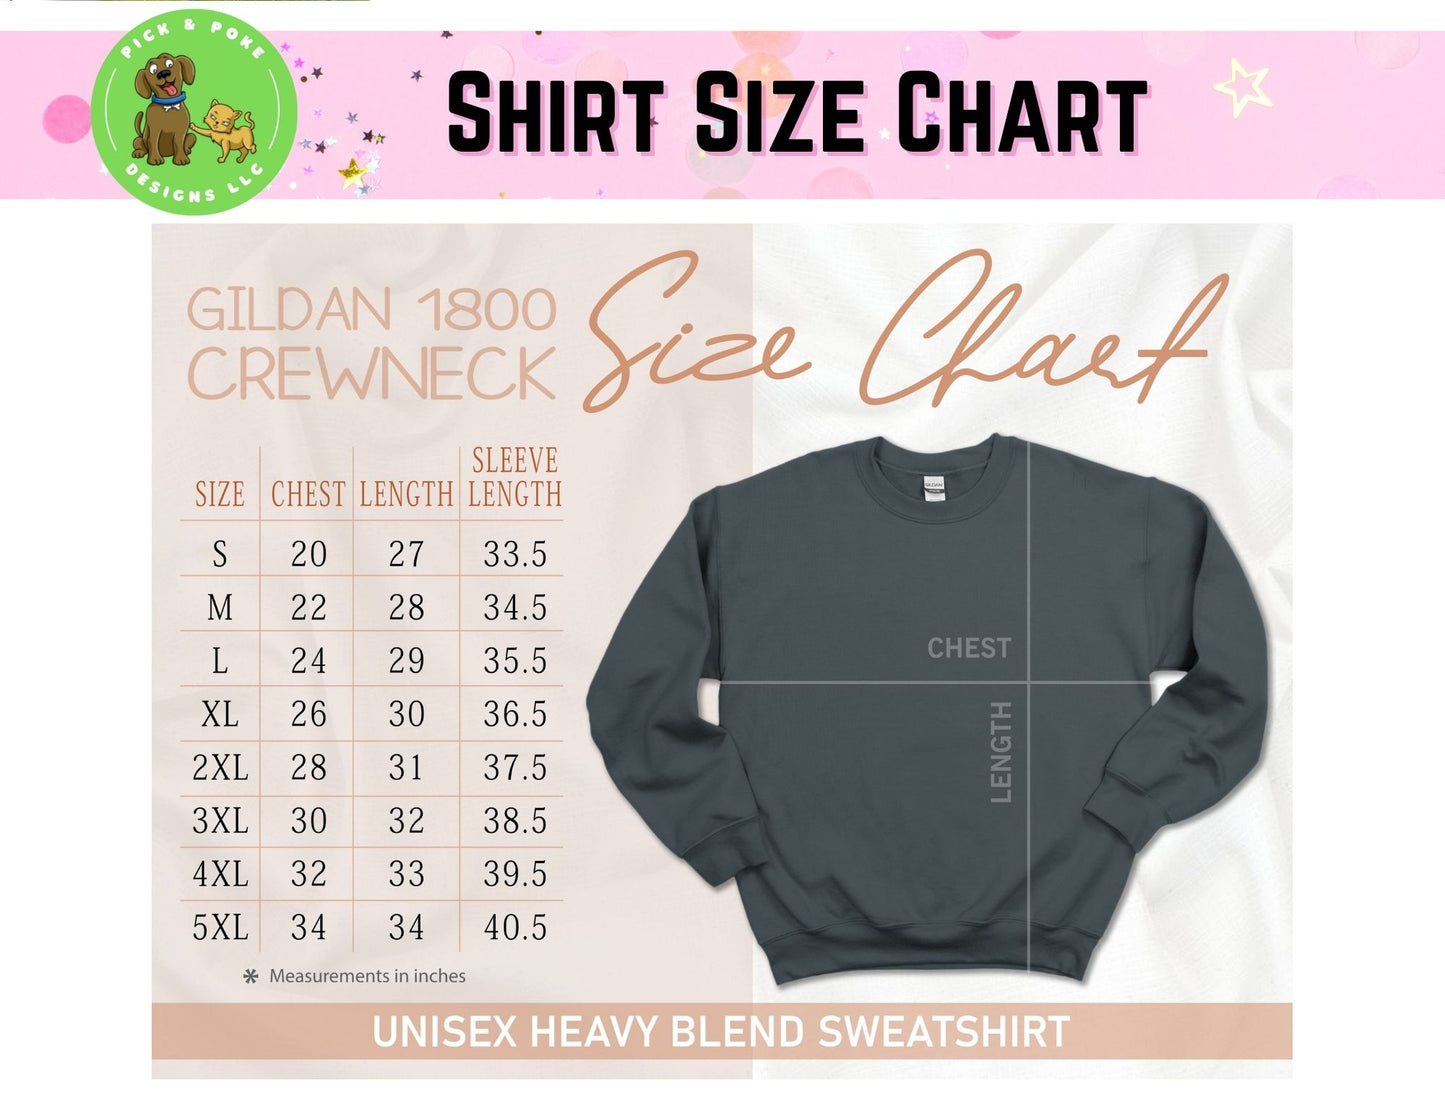 Shirt size chart for Gildan 18000 style crewneck sweatshirts